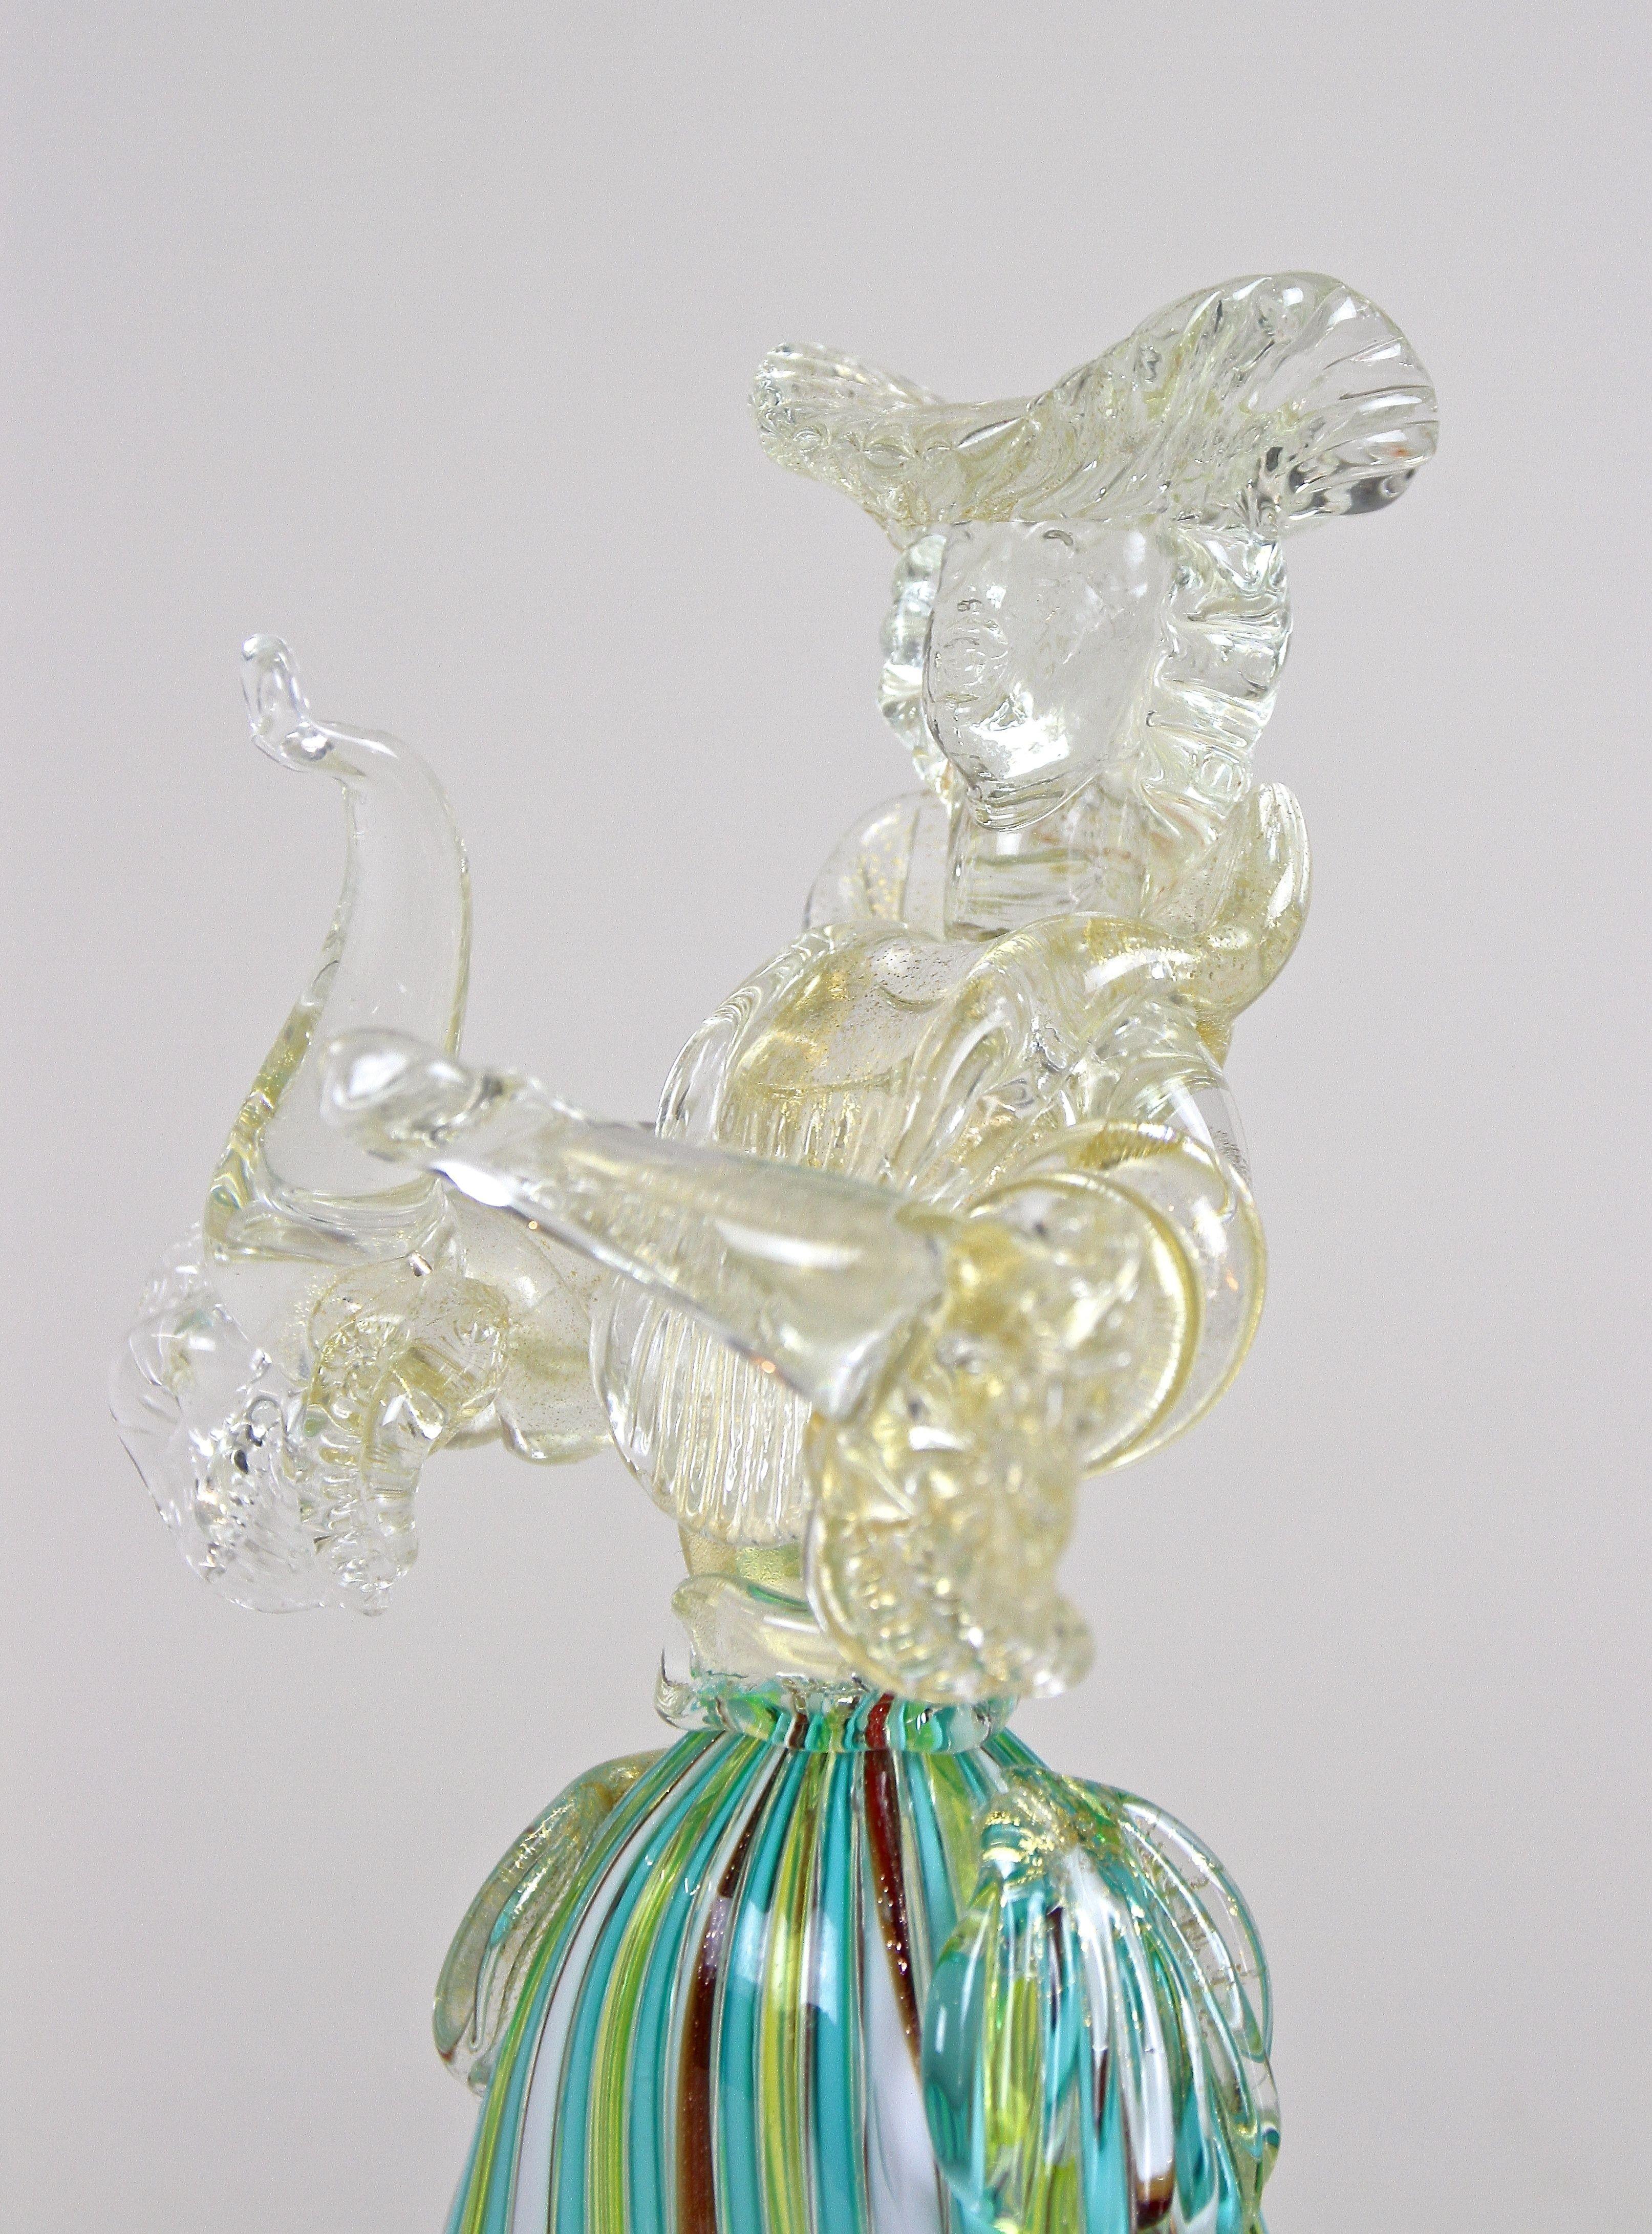 antique glass figurines